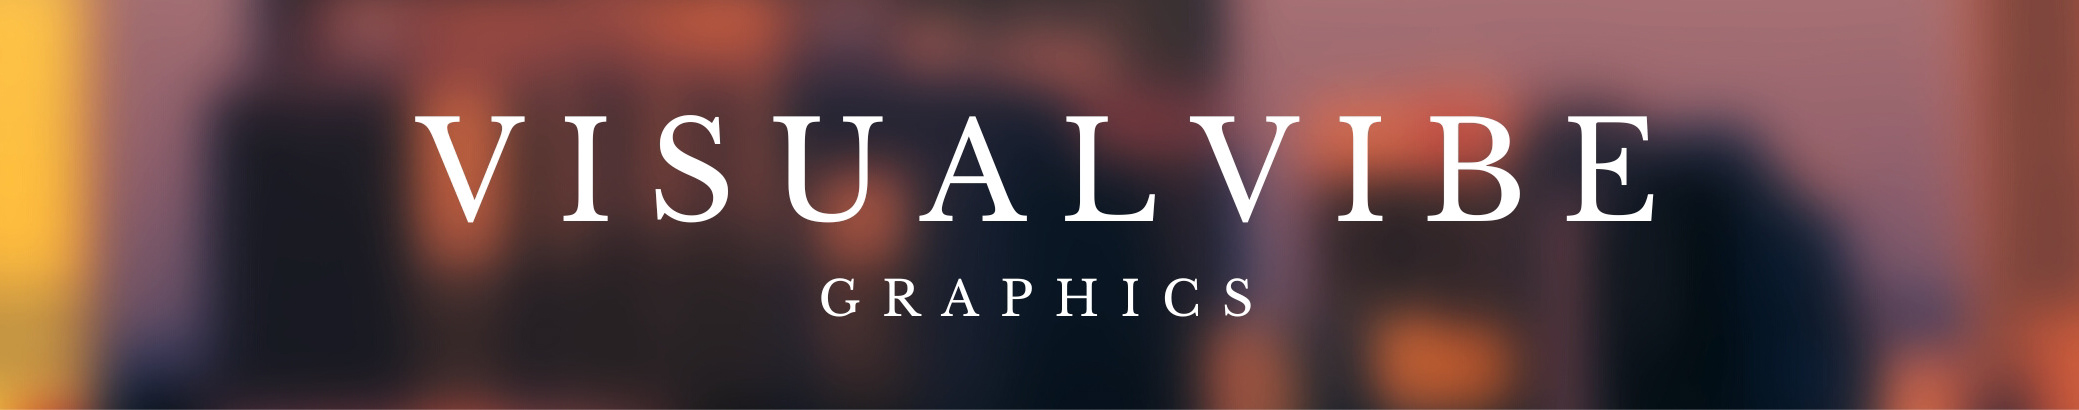 VisualVibe Graphics's profile banner